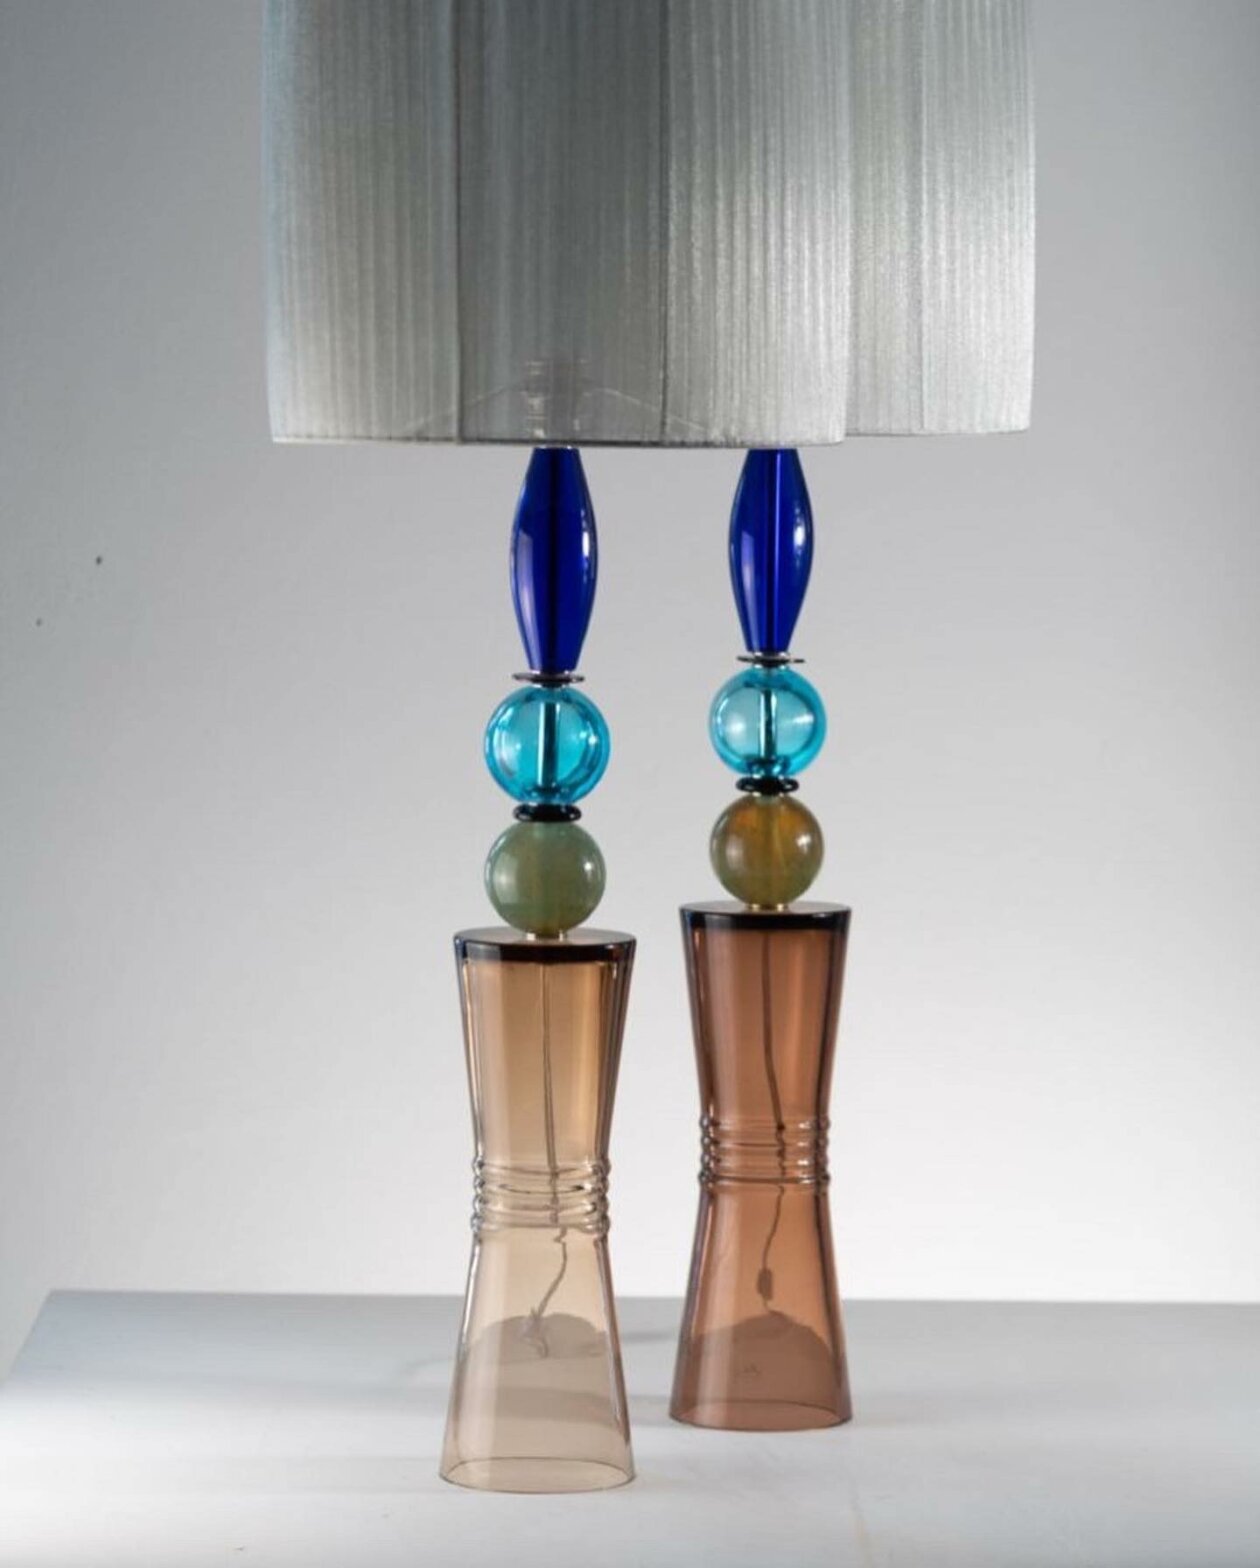 The Unique Sculptural Glass Lamps Of Silvia Finiels (19)